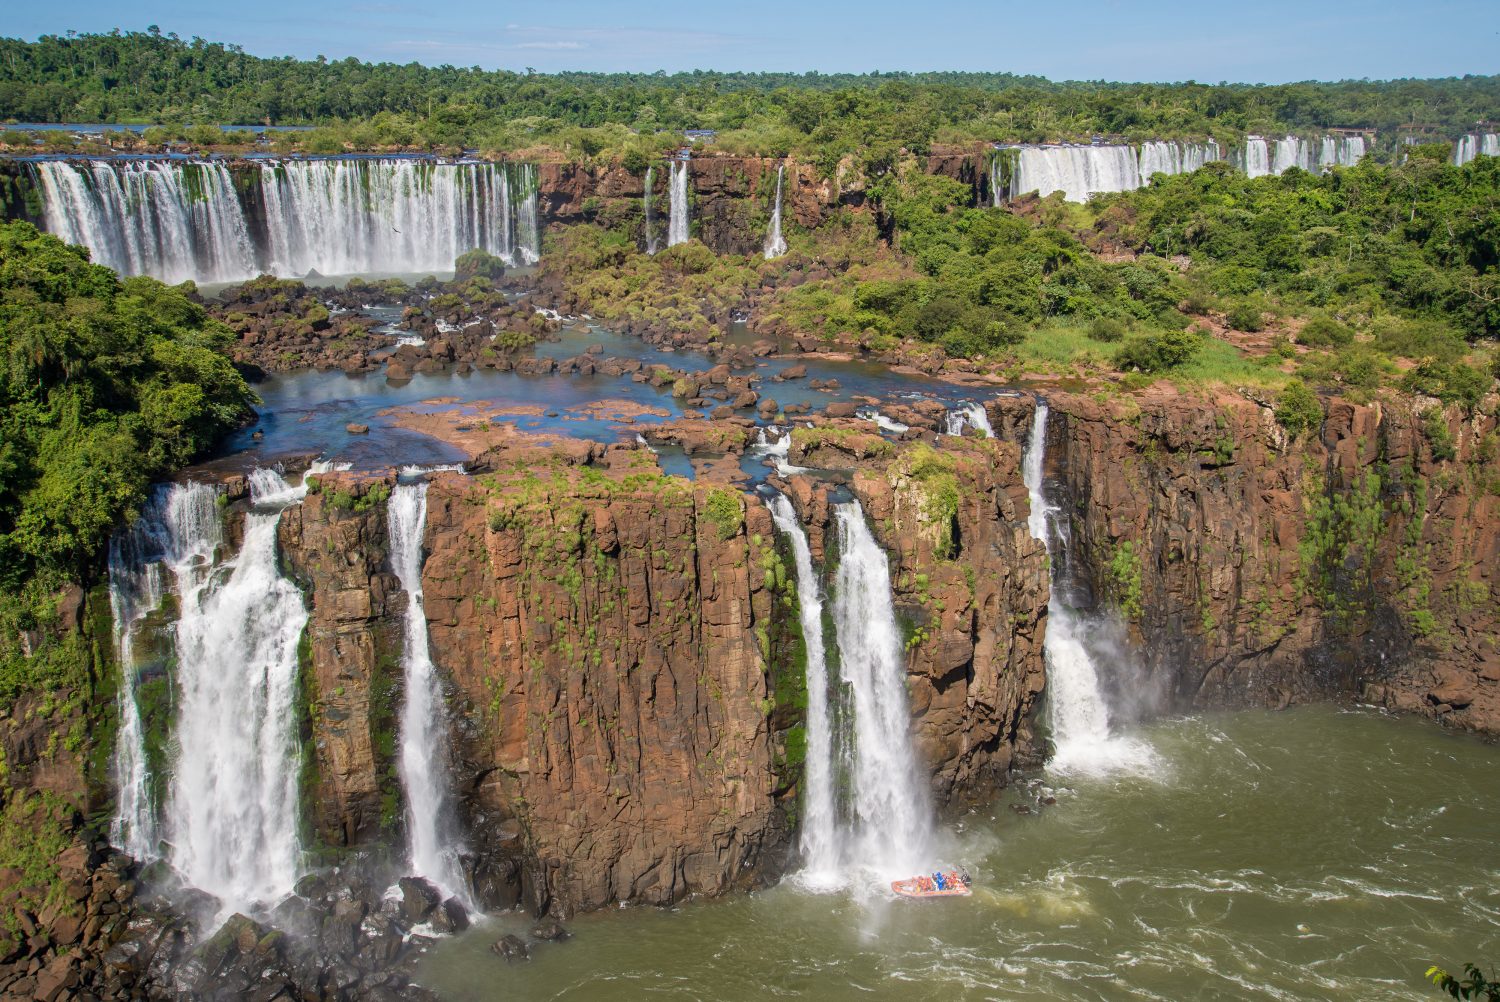 The Argentine side of the Iguaçu falls. 